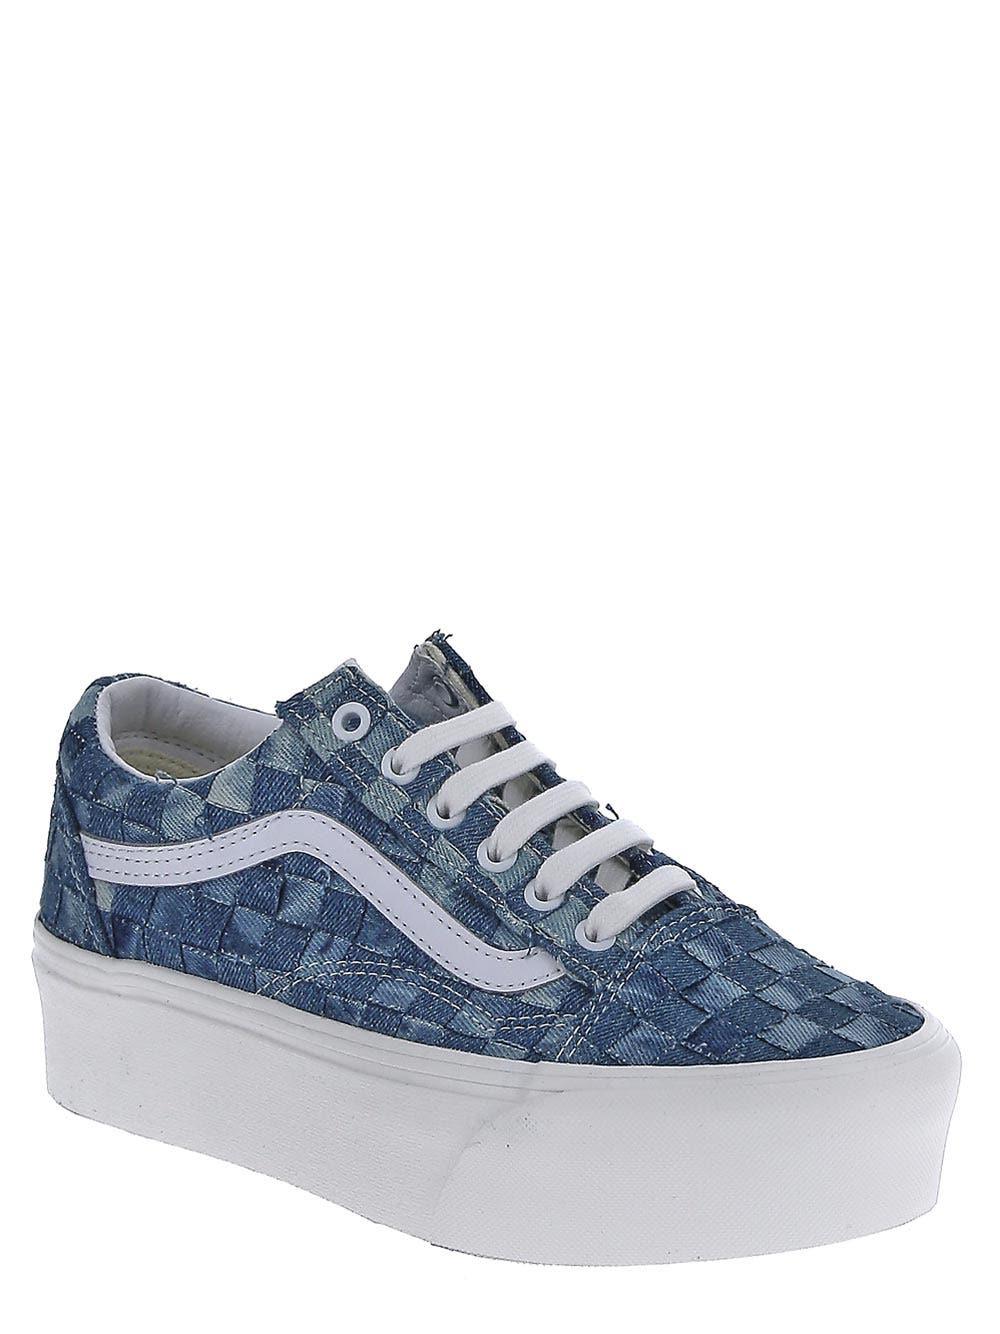 blue denim sneakers